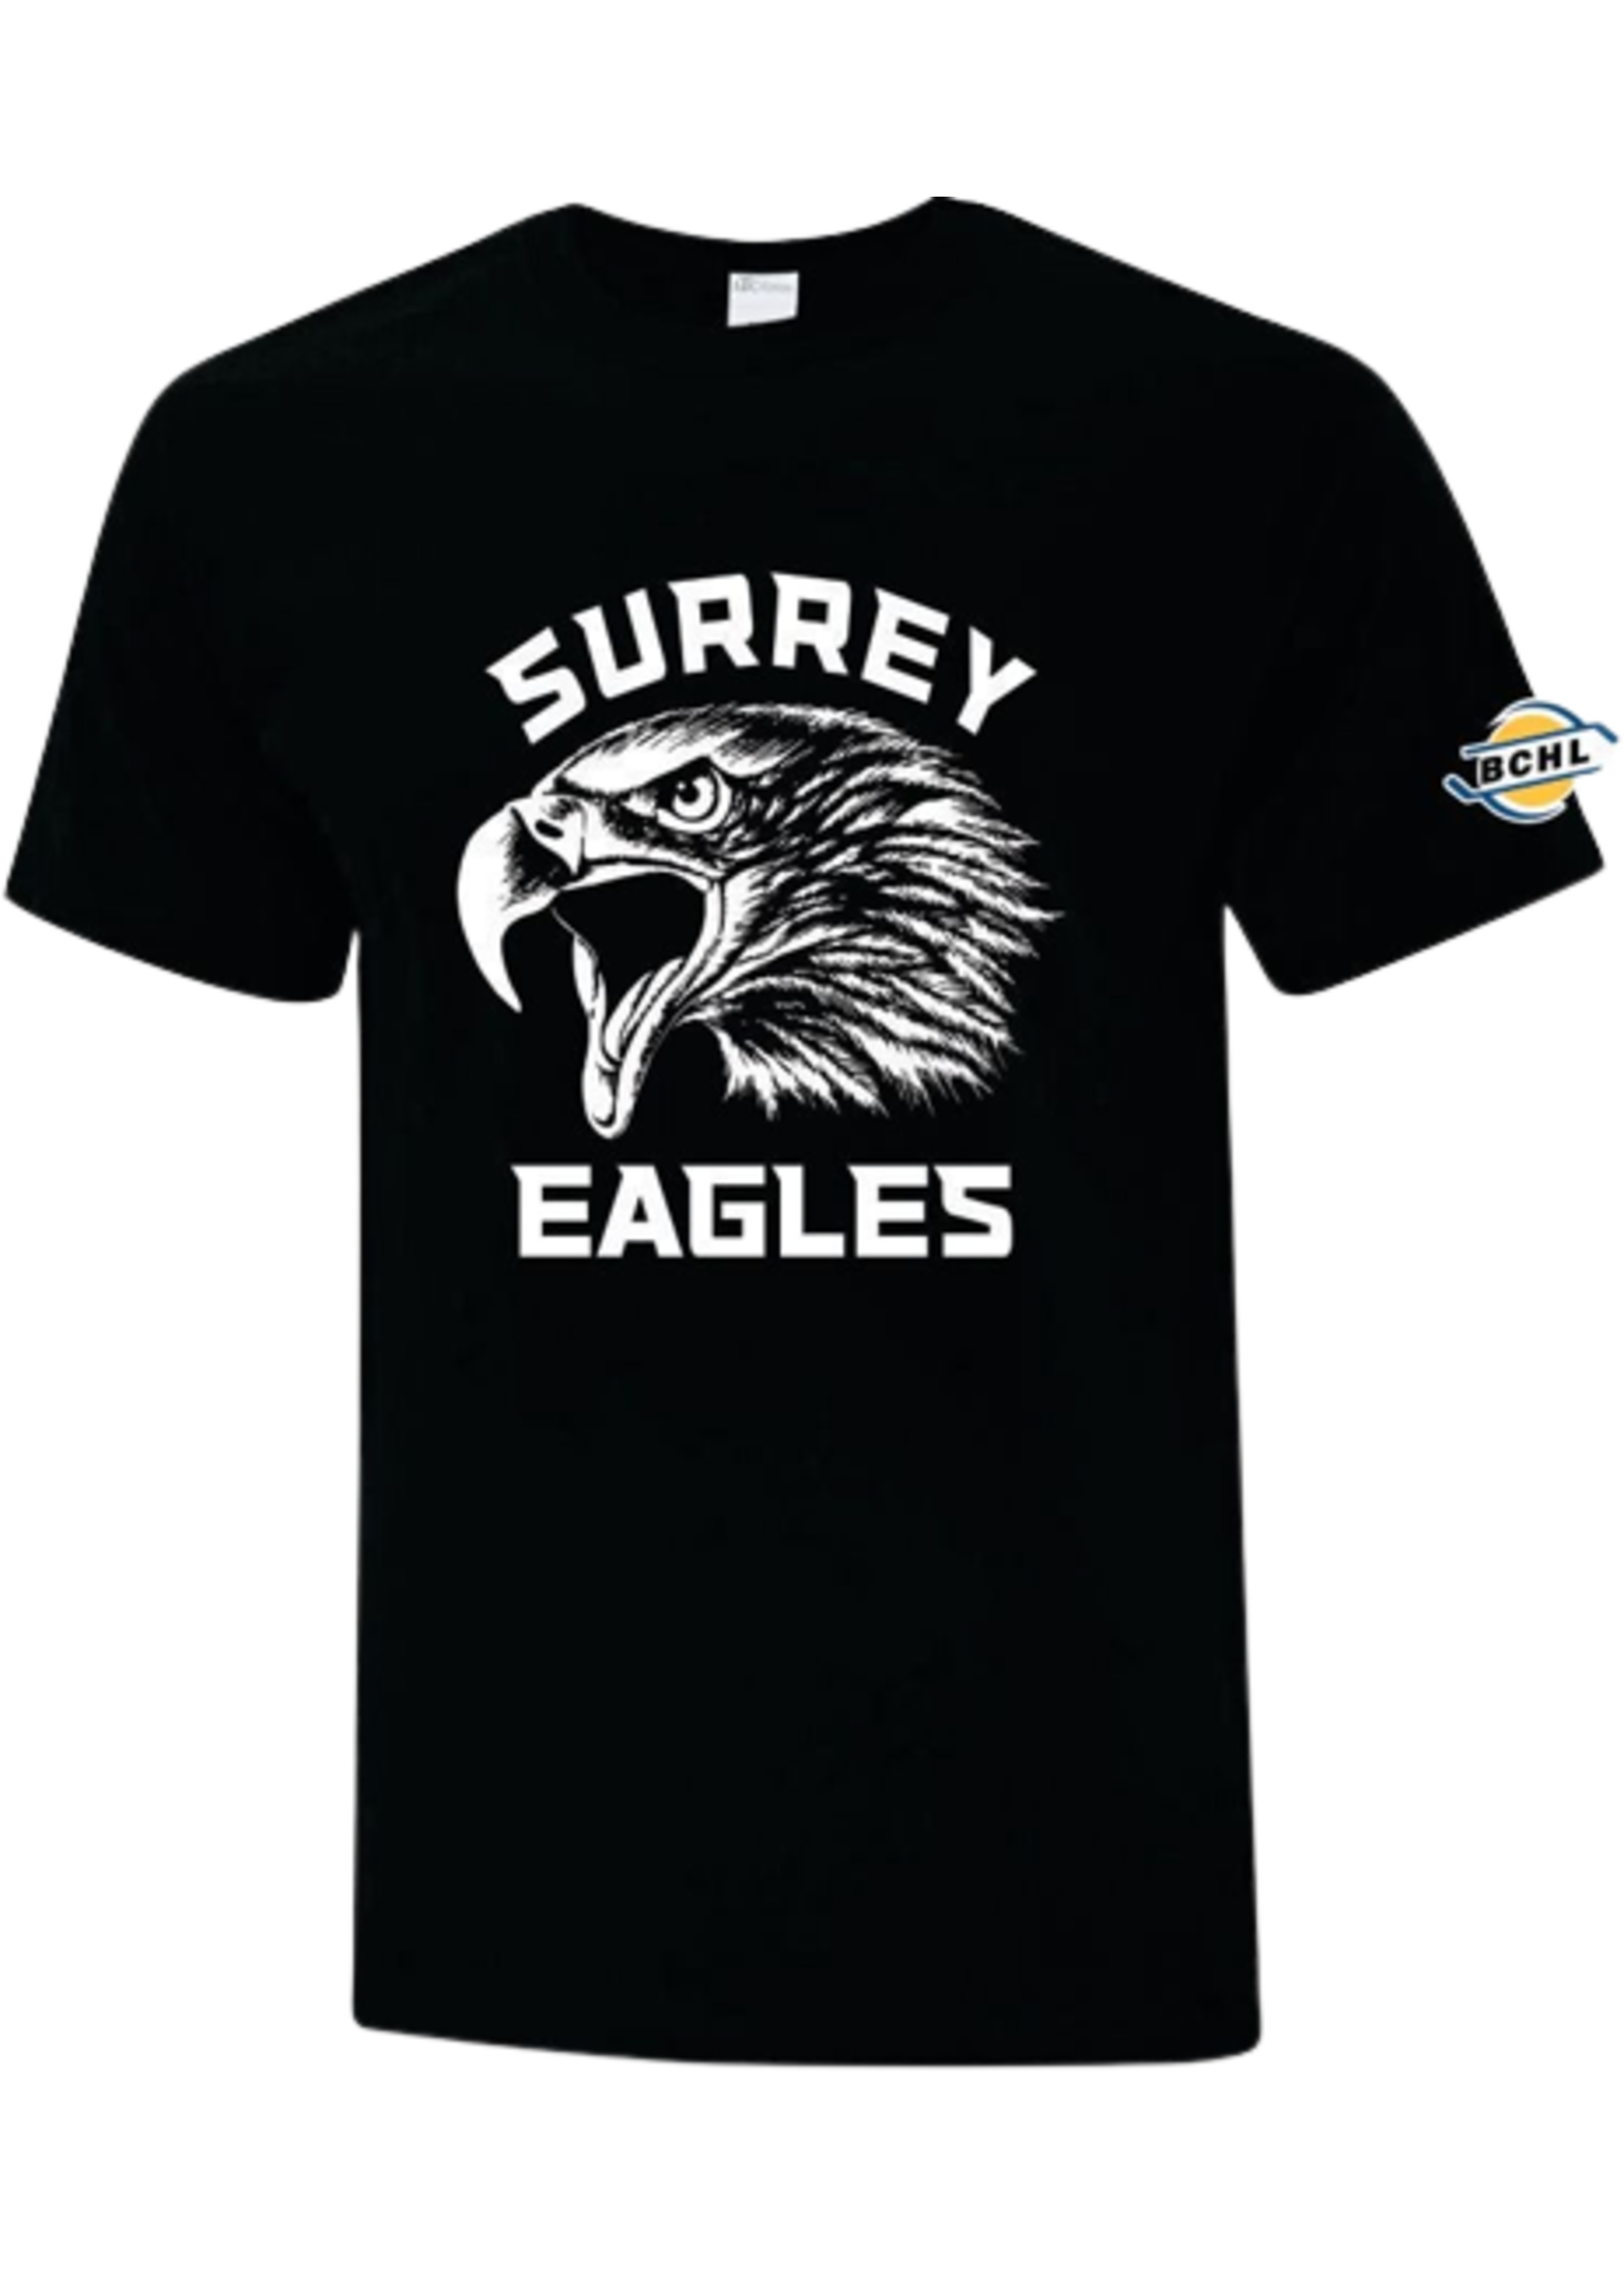 Koi Surrey Eagles Elite Edition Short Sleeve Tshirt